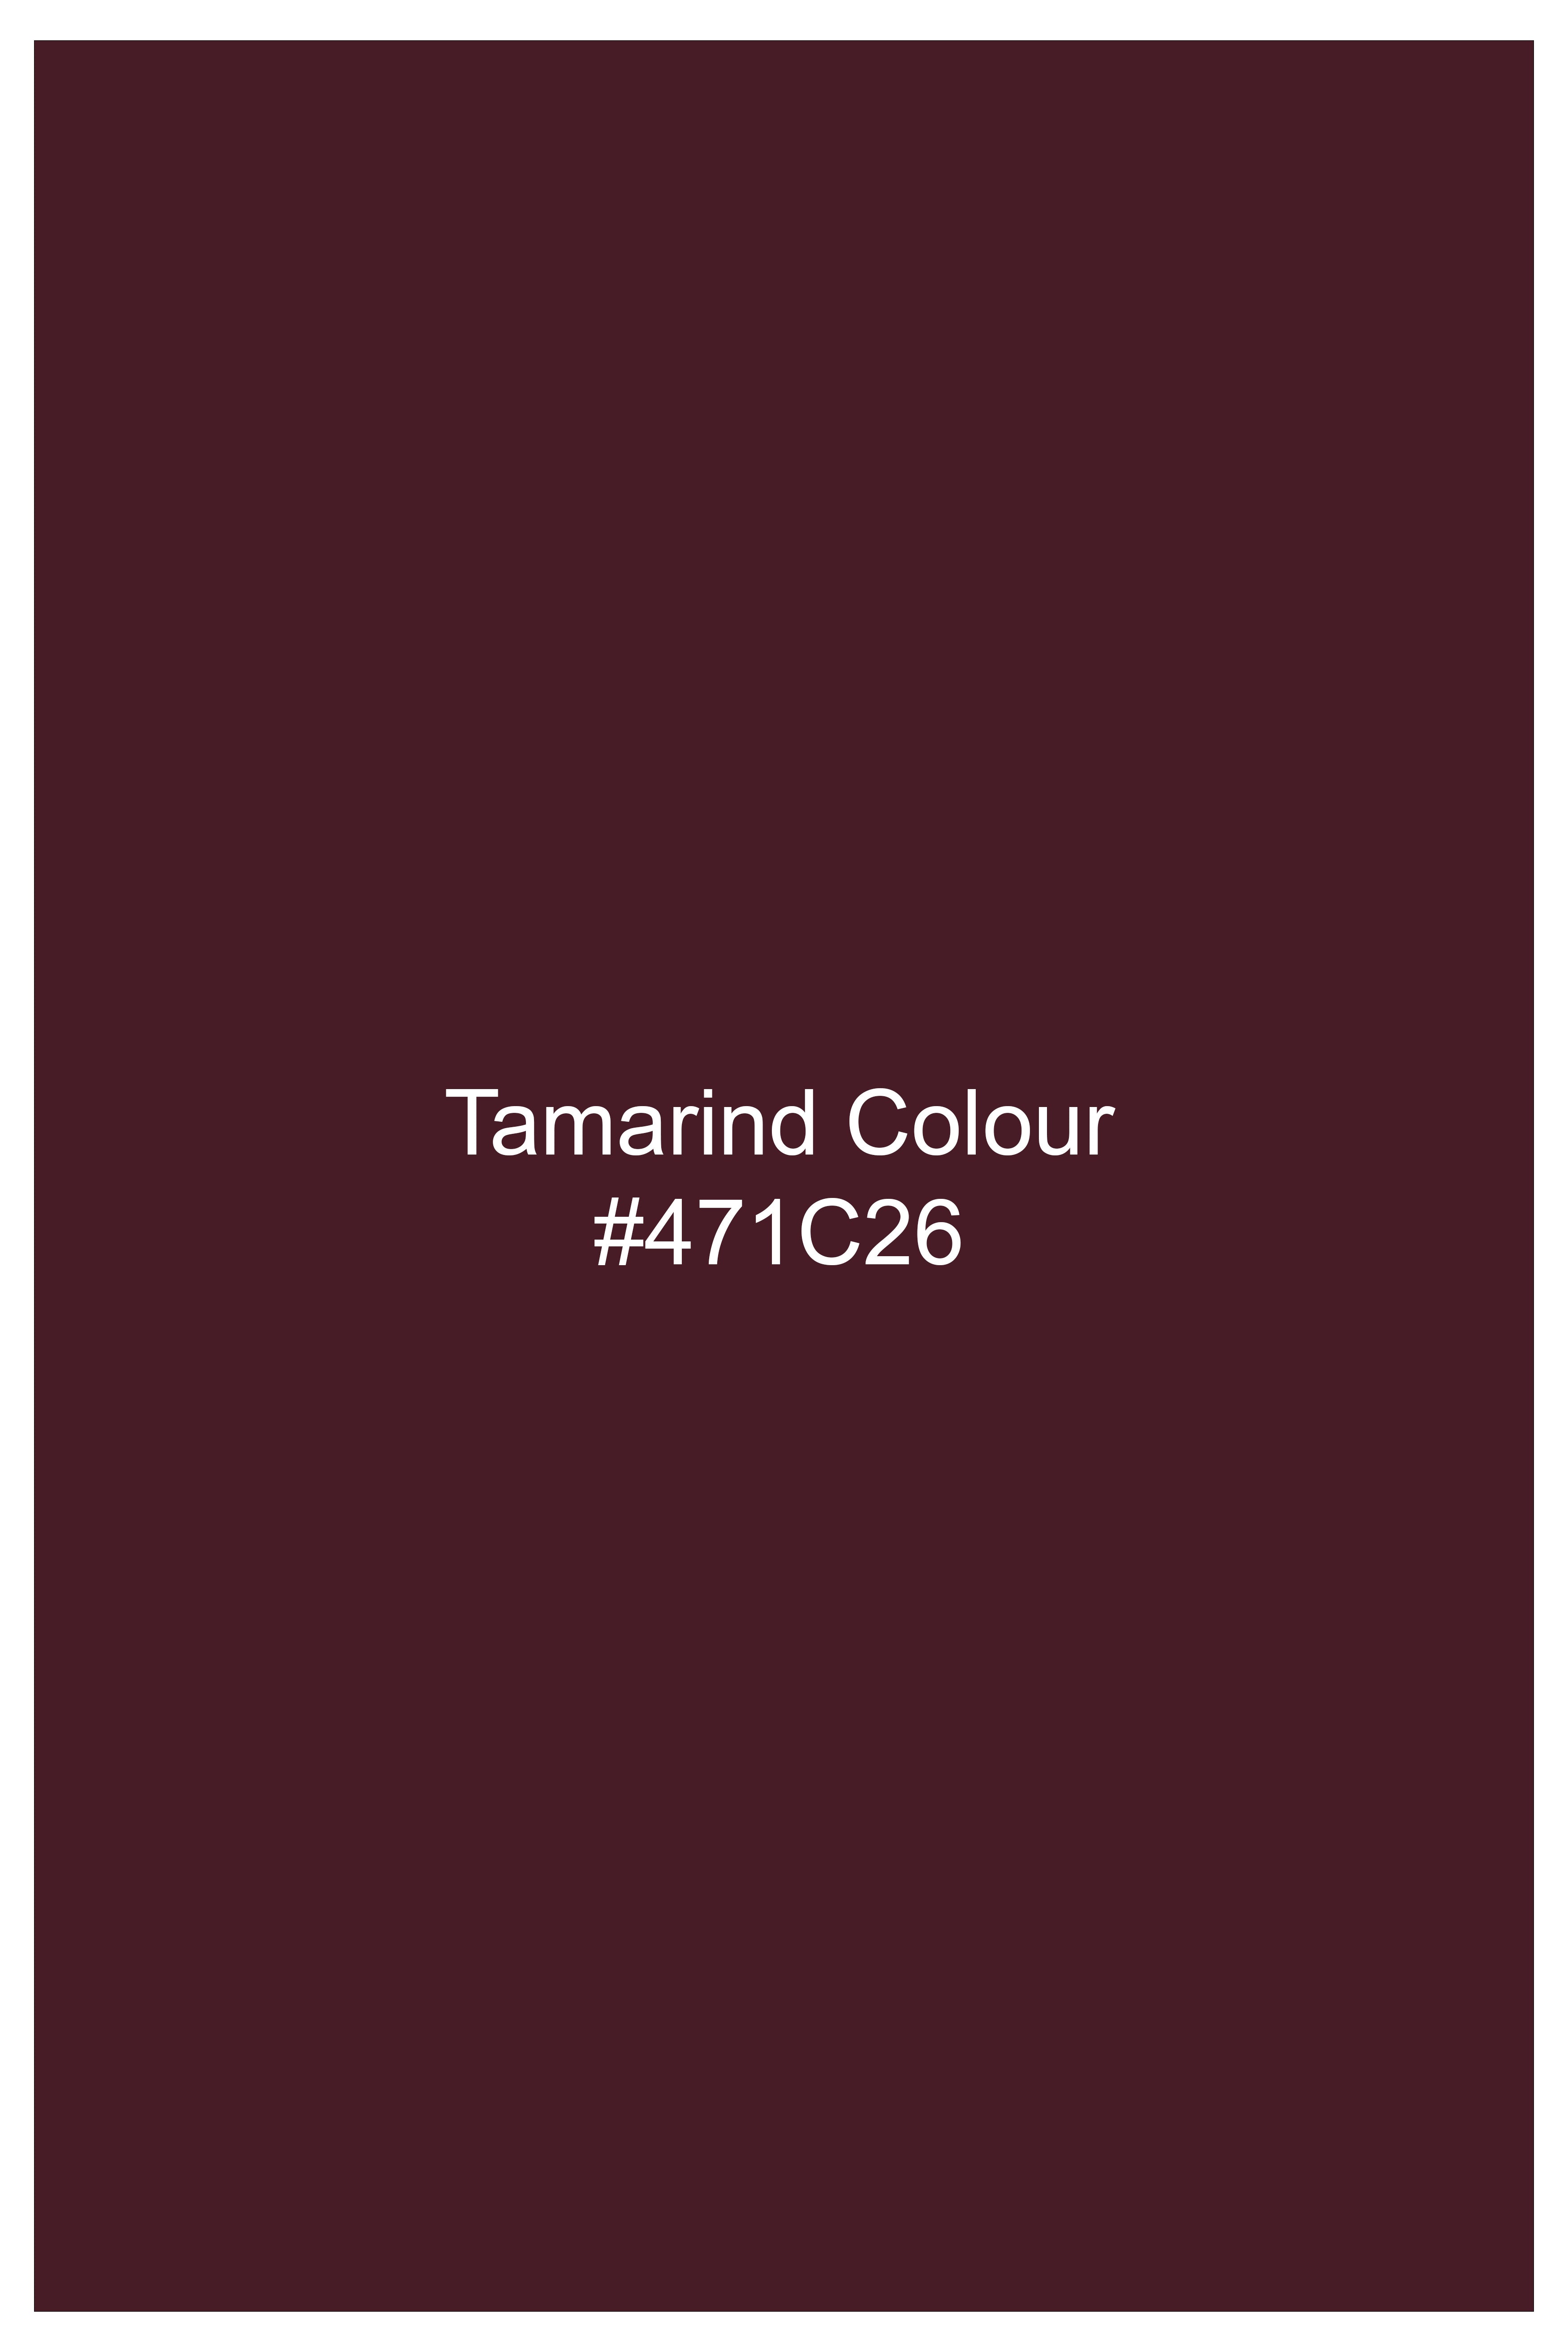 Tamarind Maroon Wool Blend Bandhgala Blazer